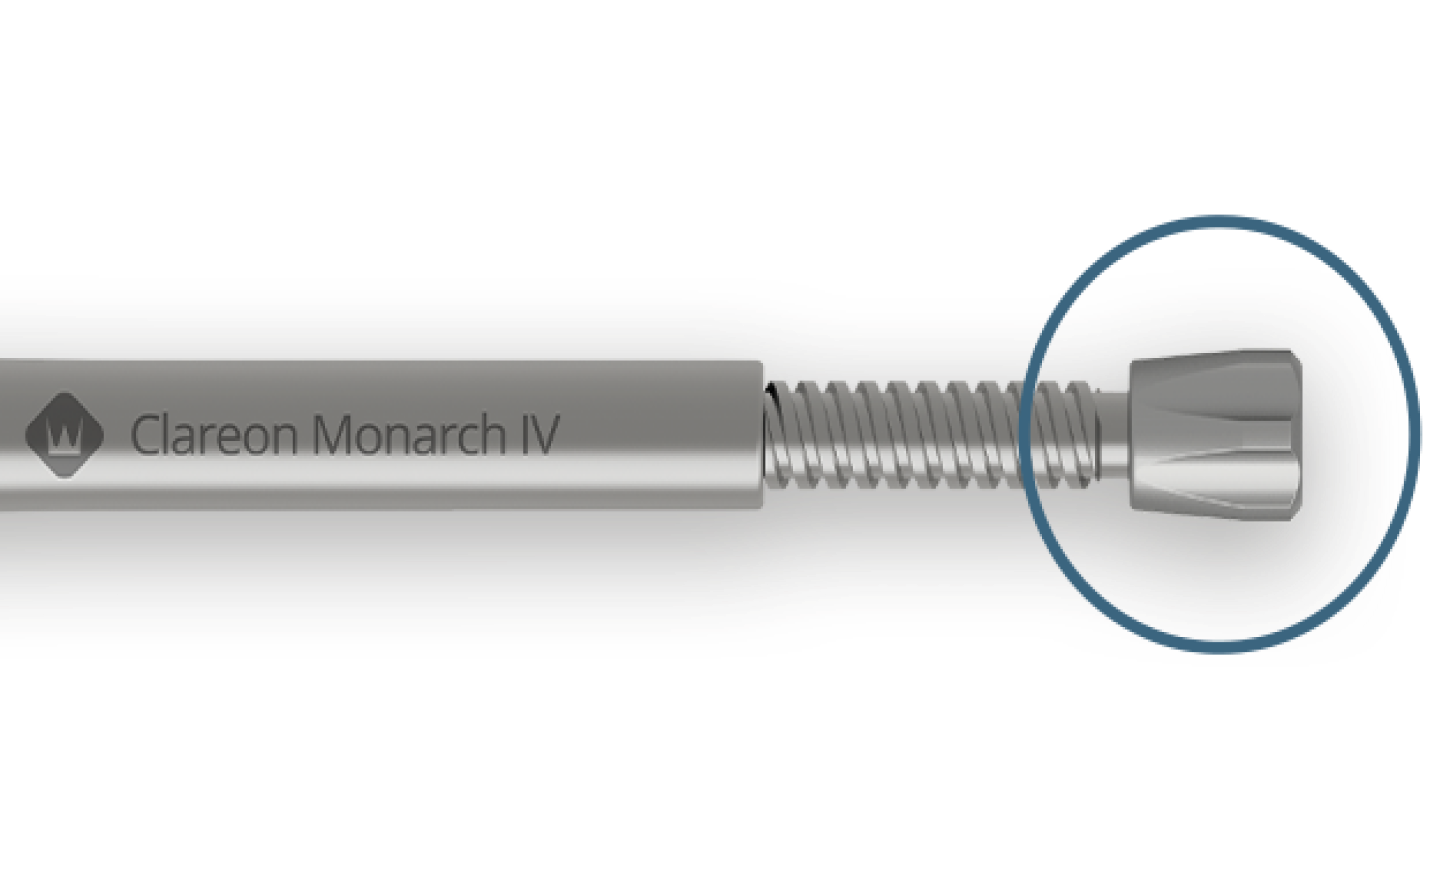 Monarch lVが水平方向に置かれ、青い丸はツイストノブを示しています。